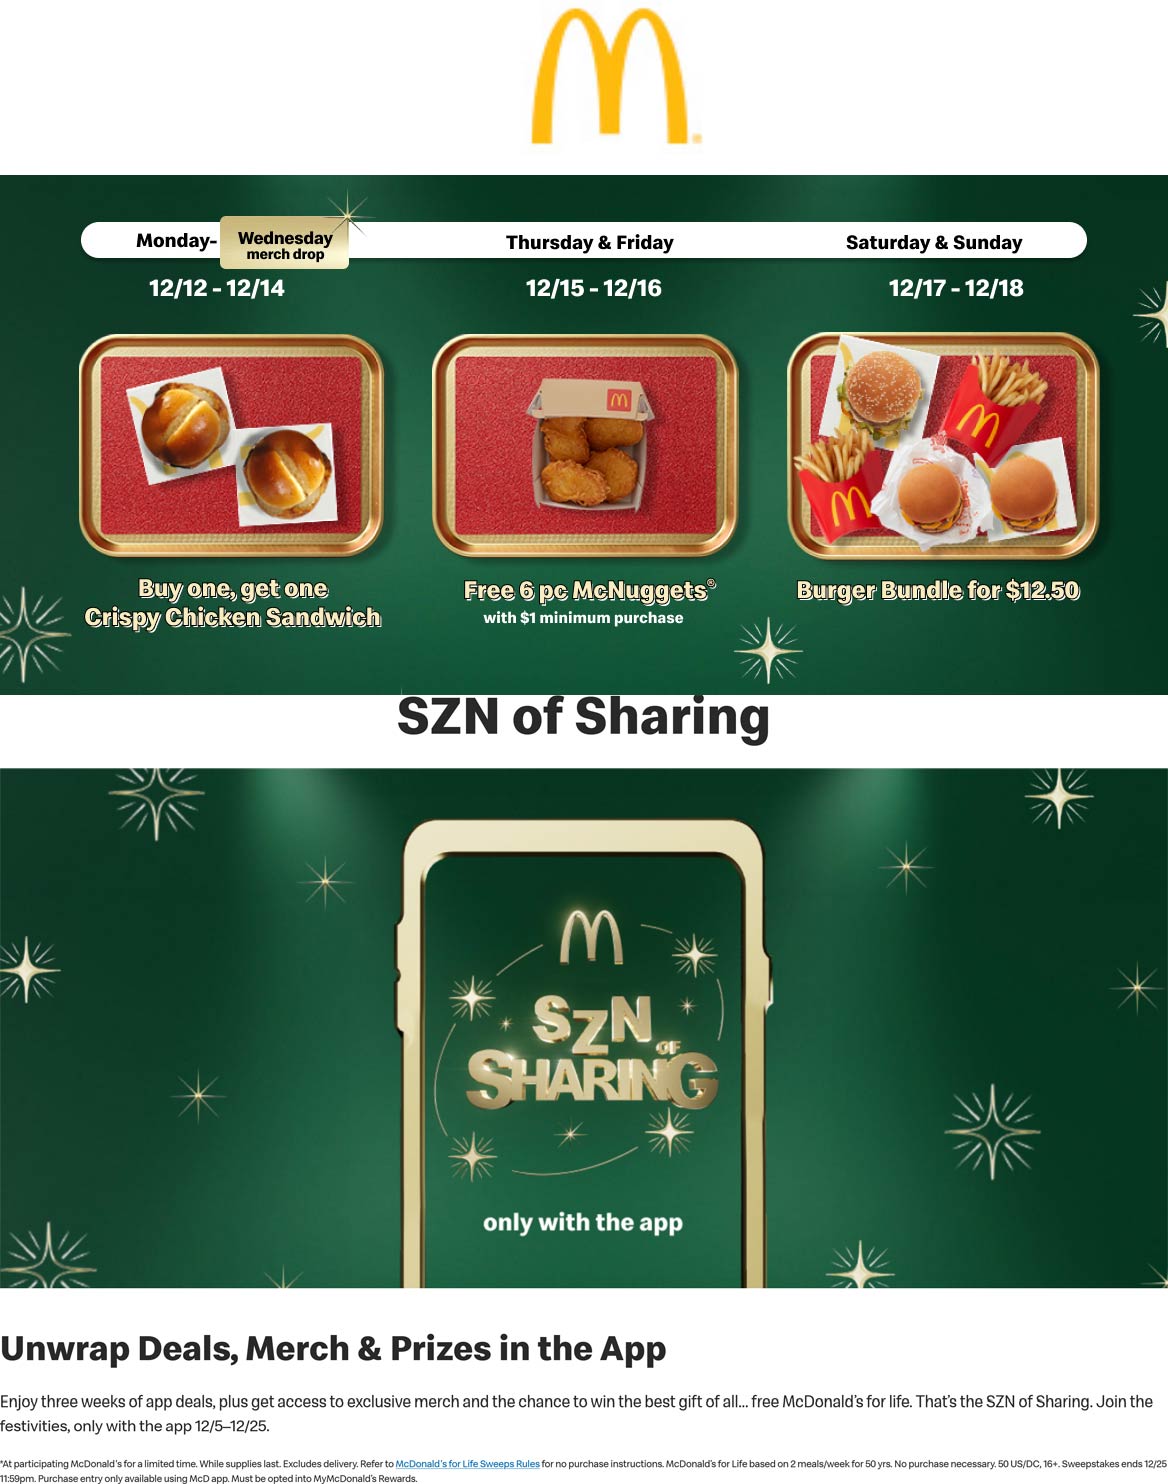 McDonalds restaurants Coupon  Free 6pc nuggets on $1 at McDonalds restaurants #mcdonalds 